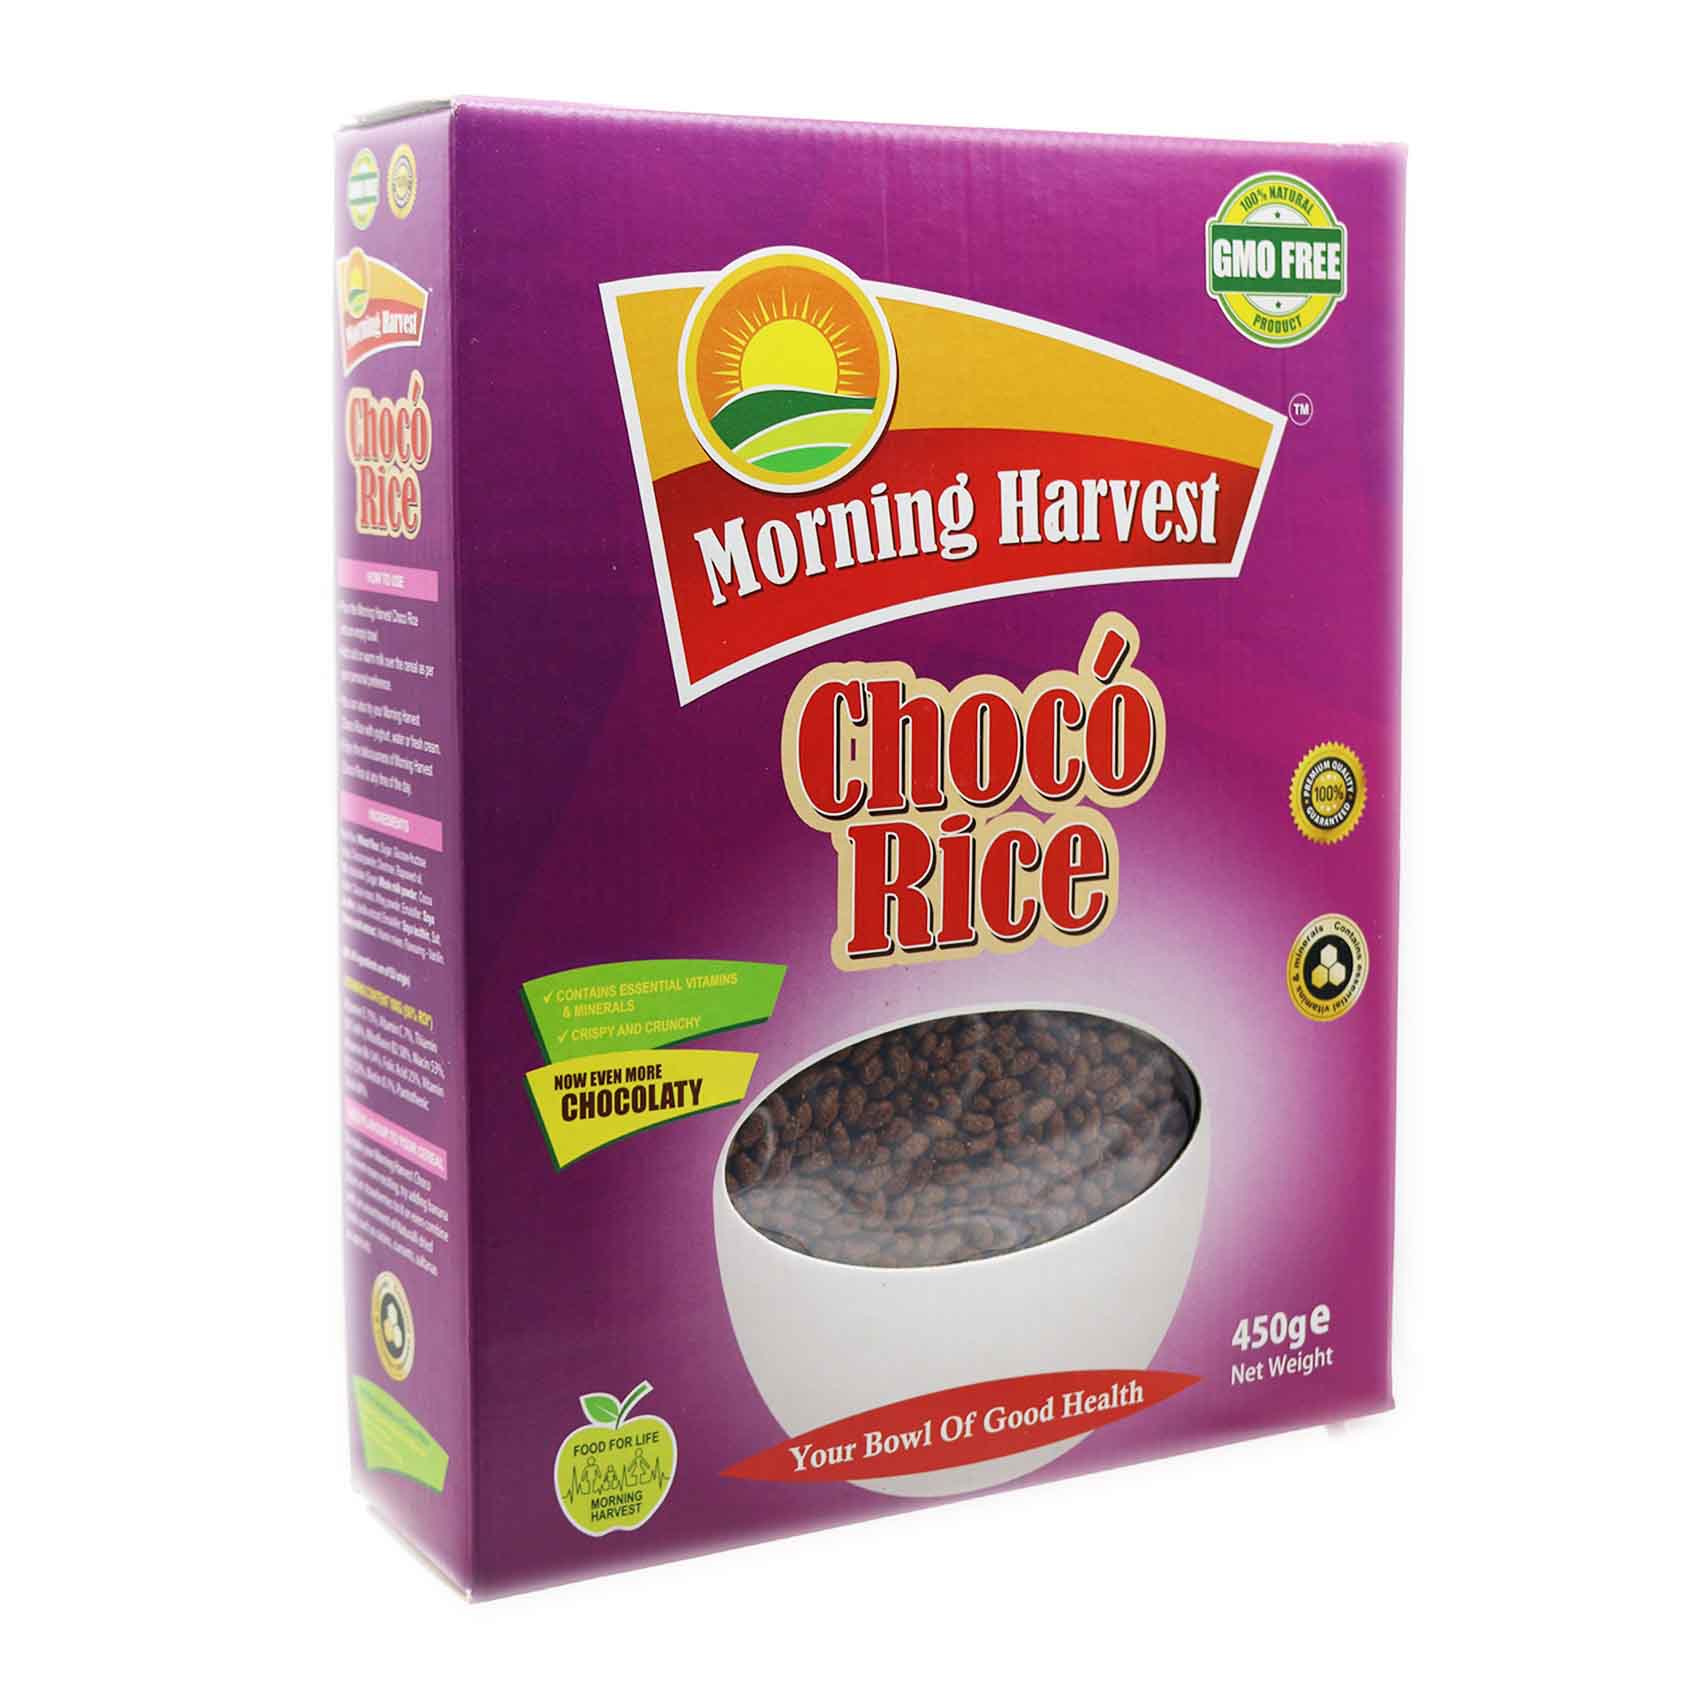 Morning Harvest Choco Rice 450g